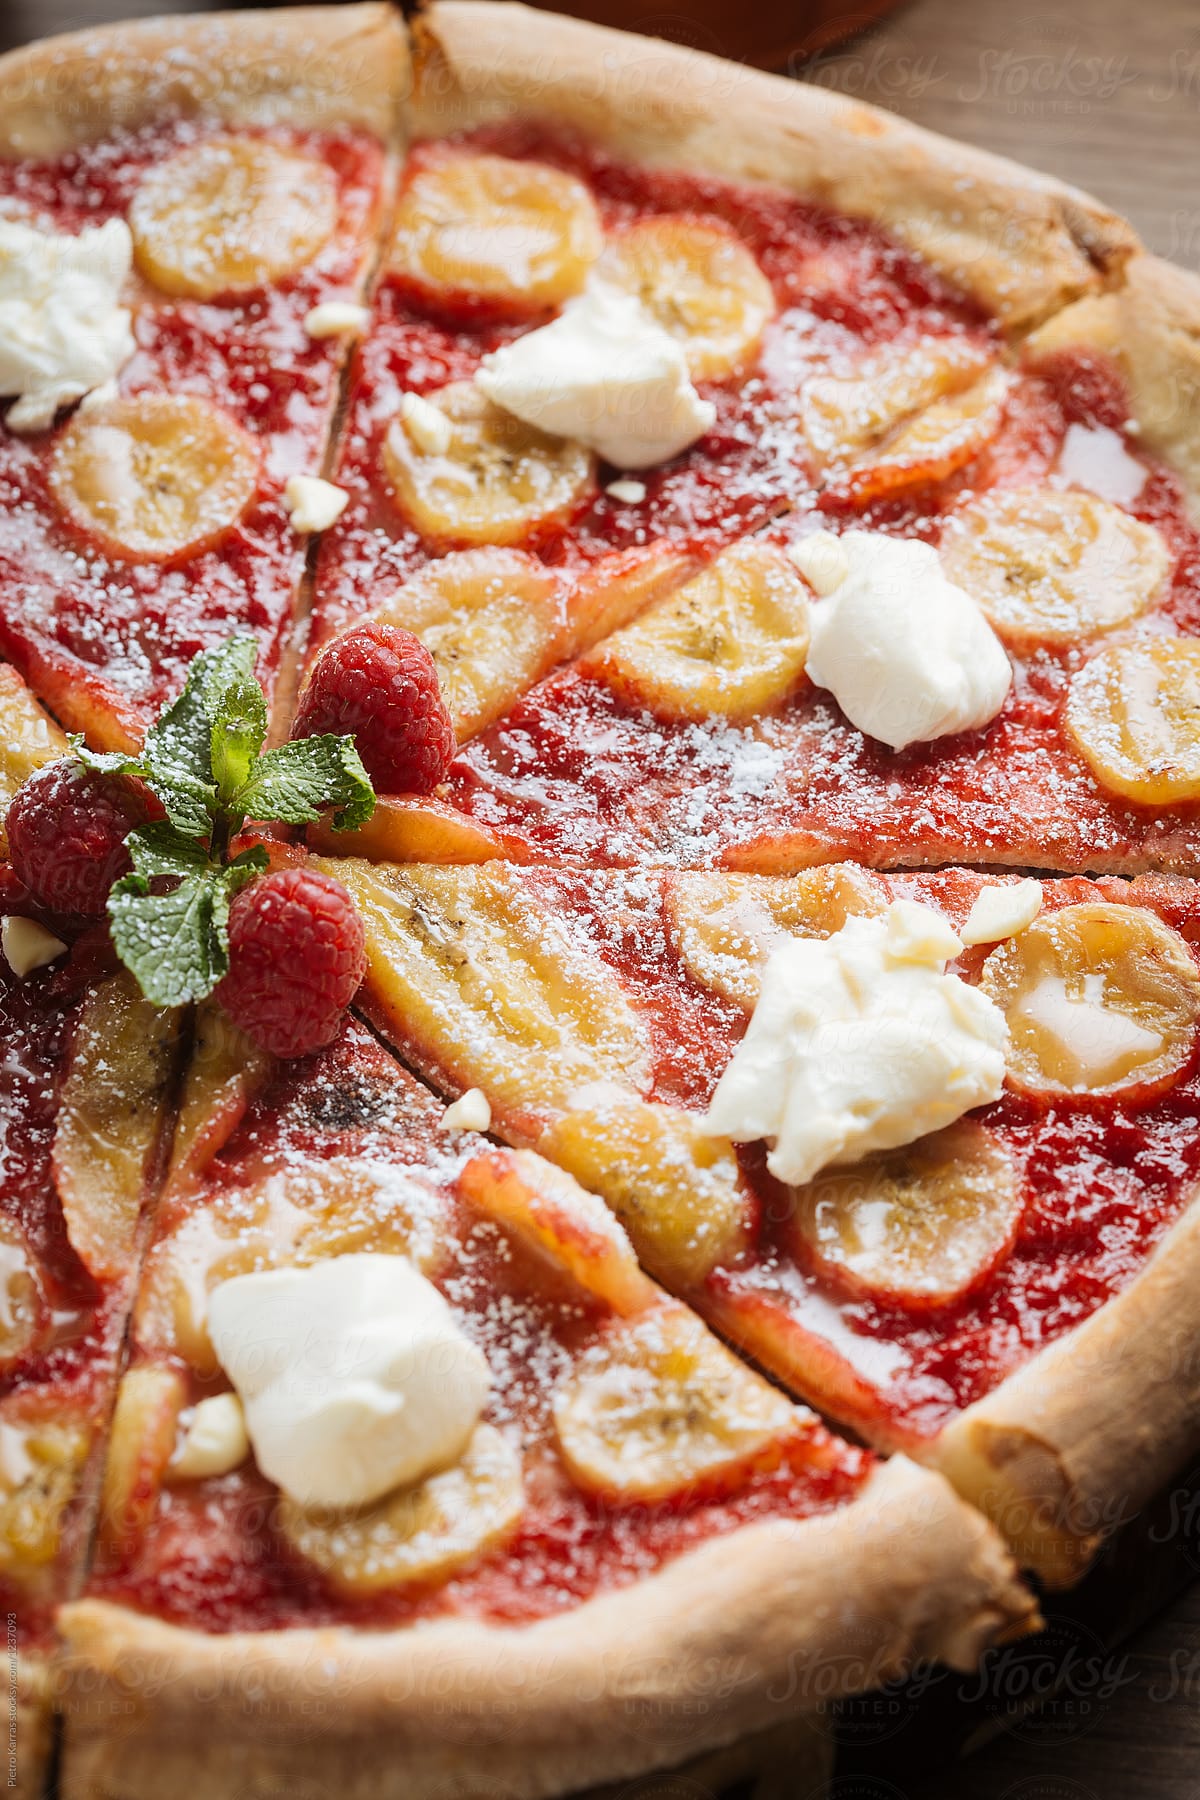 Sweet pizza with raspberry sauce and banana